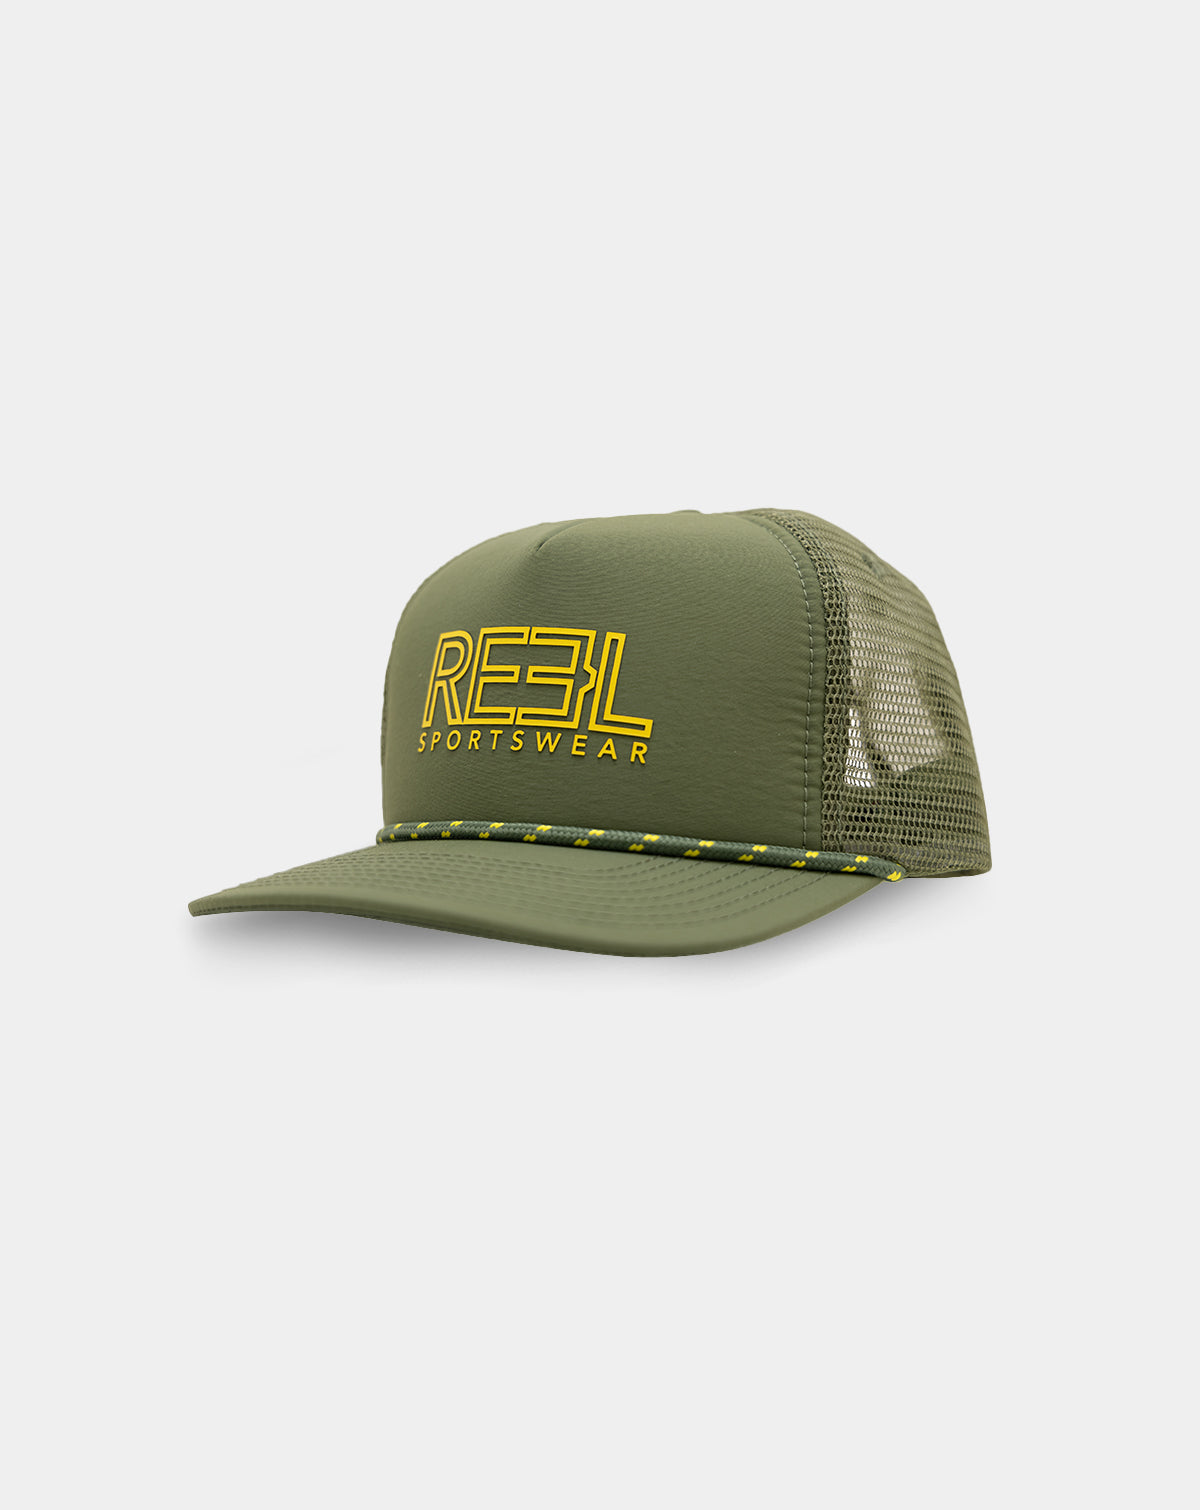 Hustler olive trucker cap - fishing hats